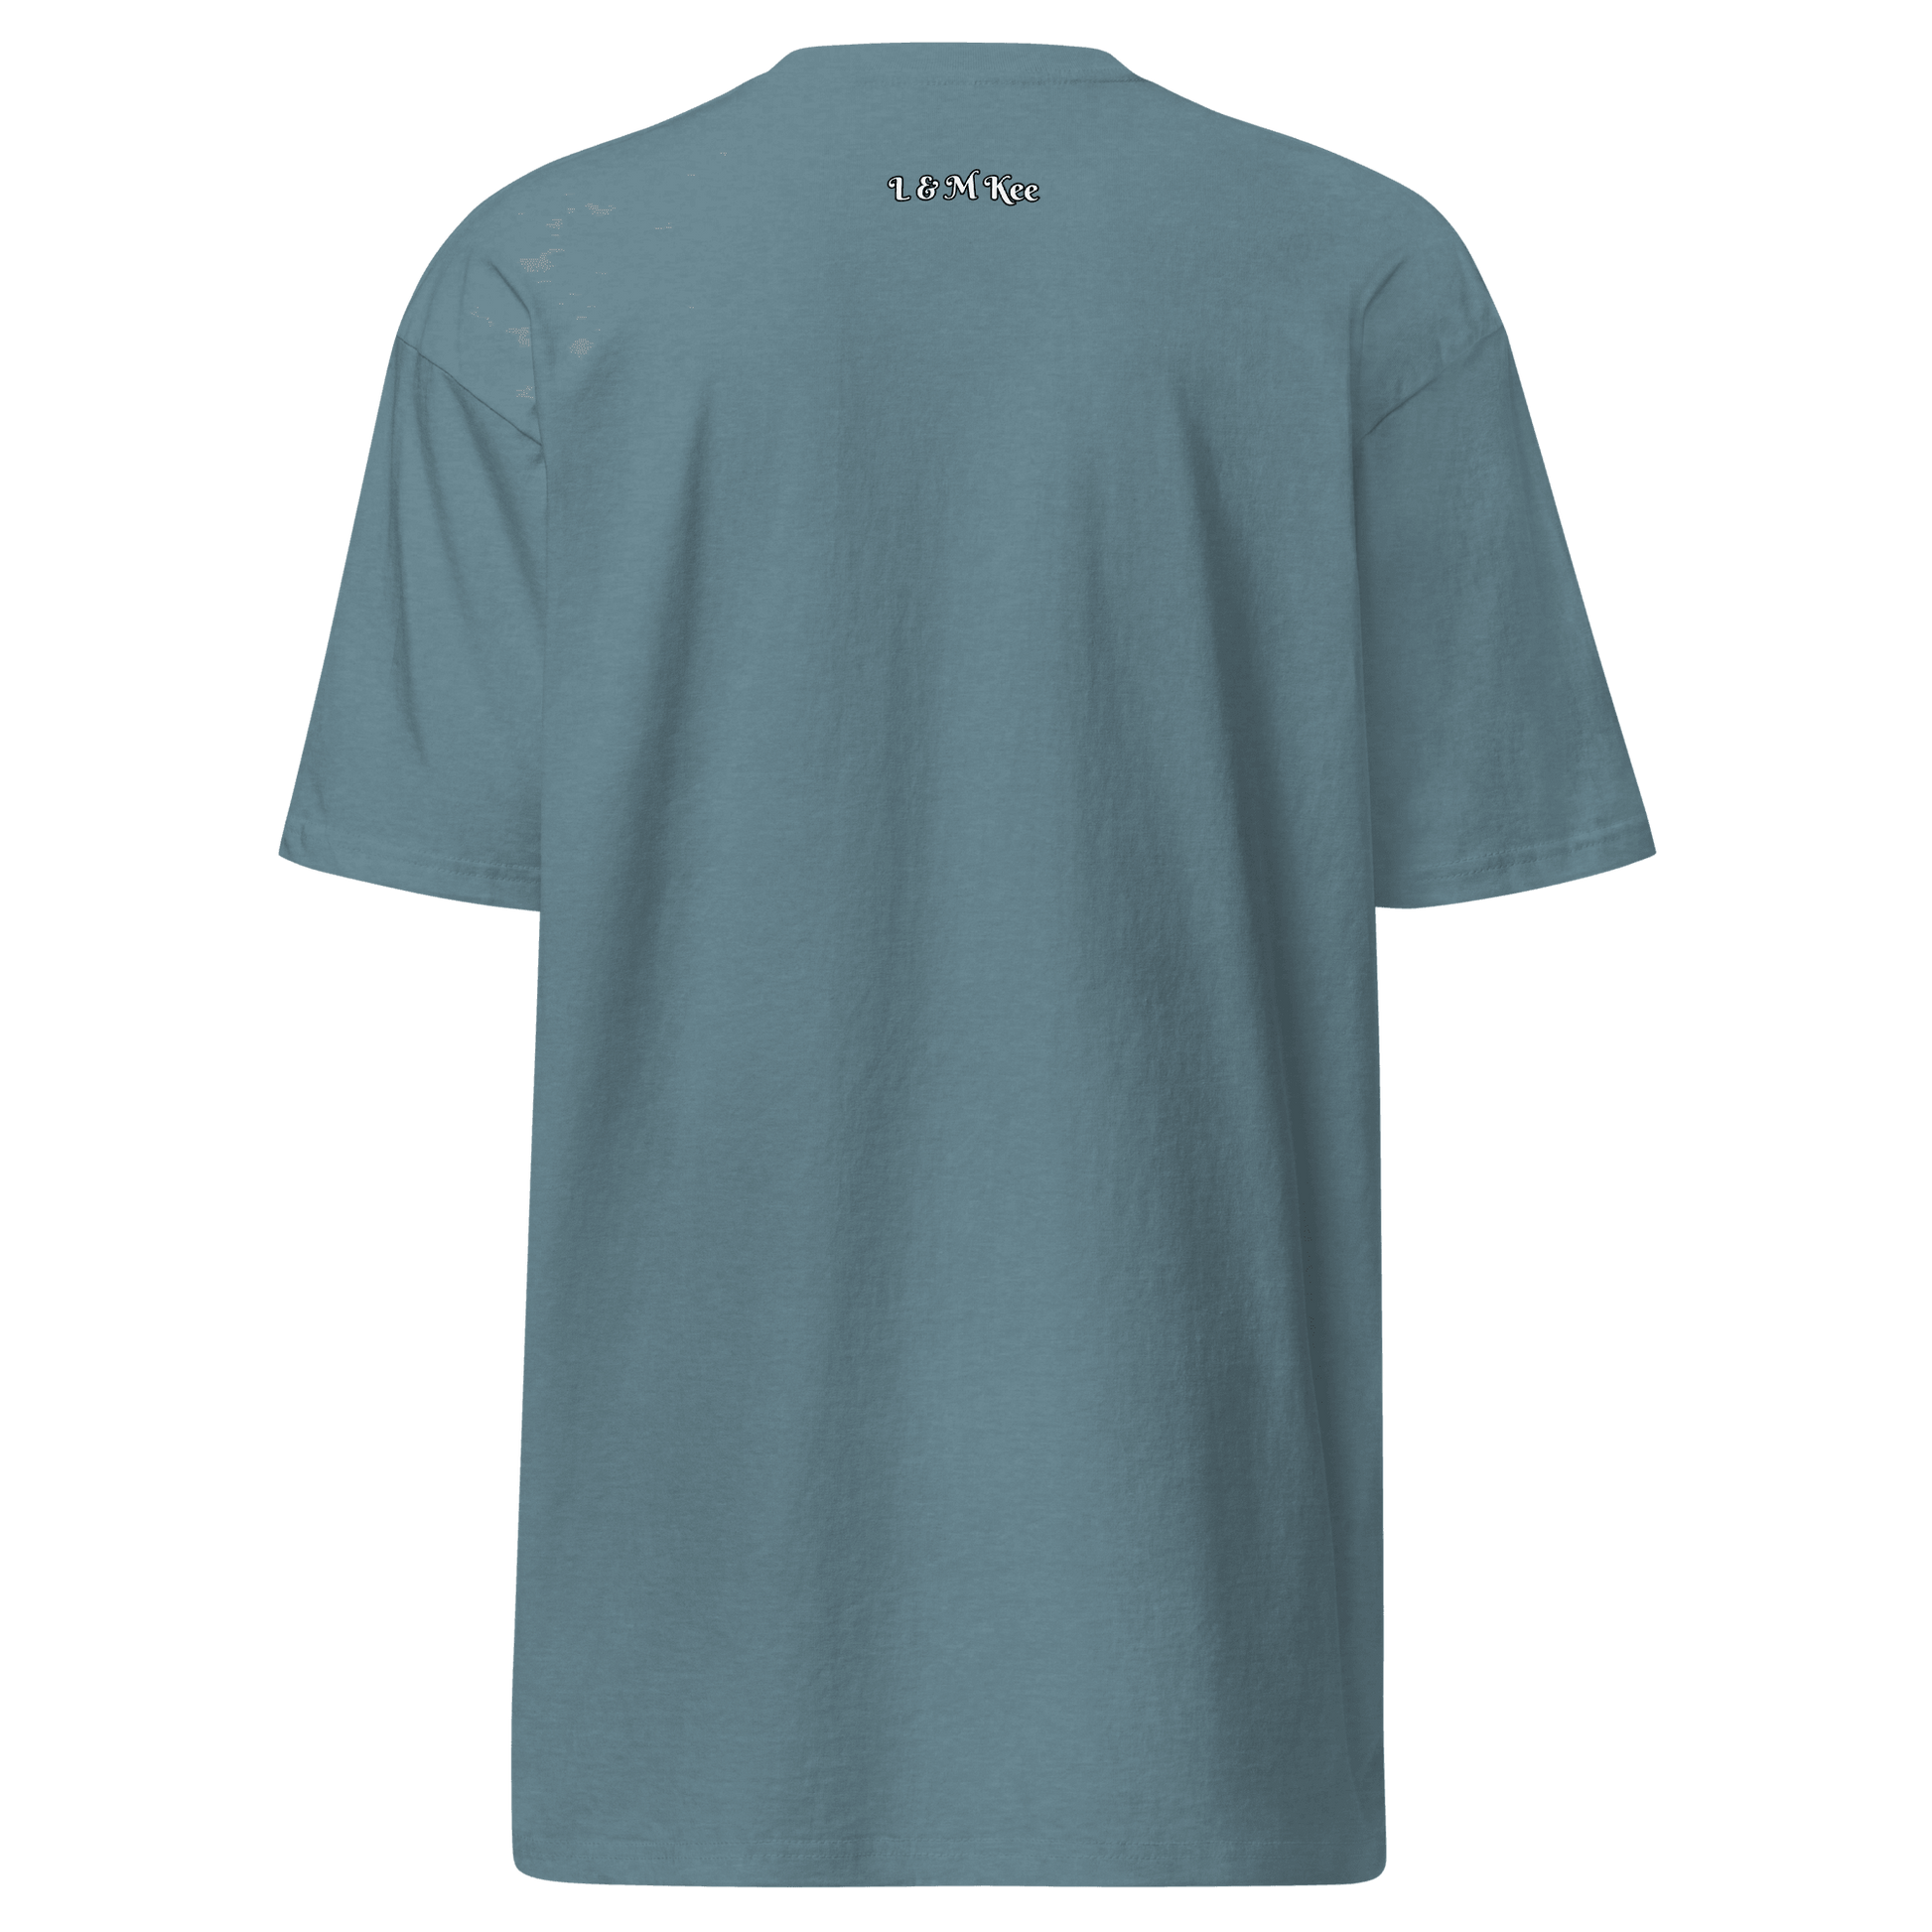 Farm Fresh T-Shirt - L & M Kee, LLC